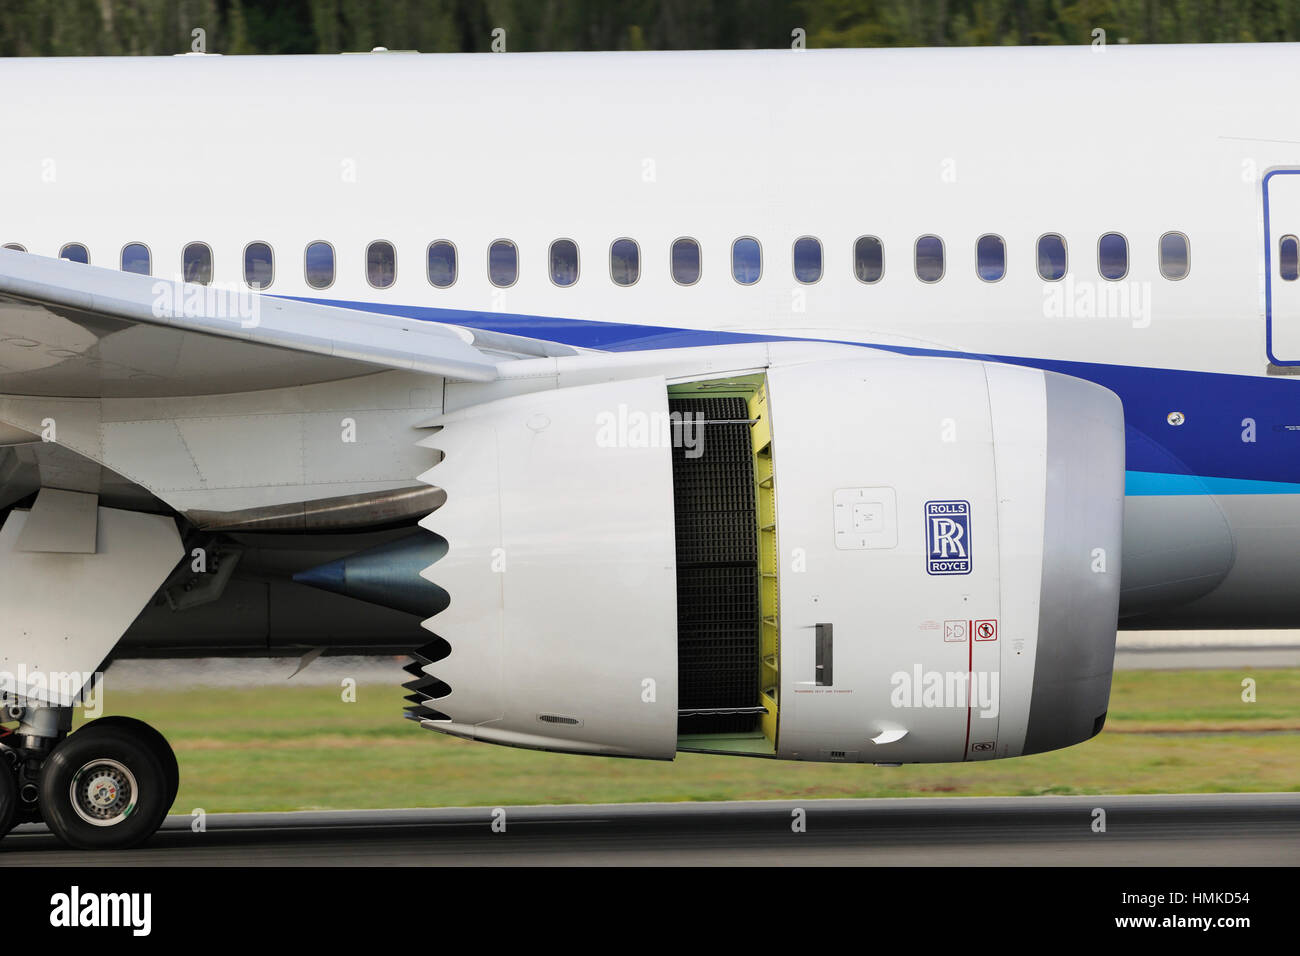 air-brakes on Rolls-Royce Trent 1000 engine on ANA All Nippon Airways Boeing 787-8 Dreamliner landing Stock Photo